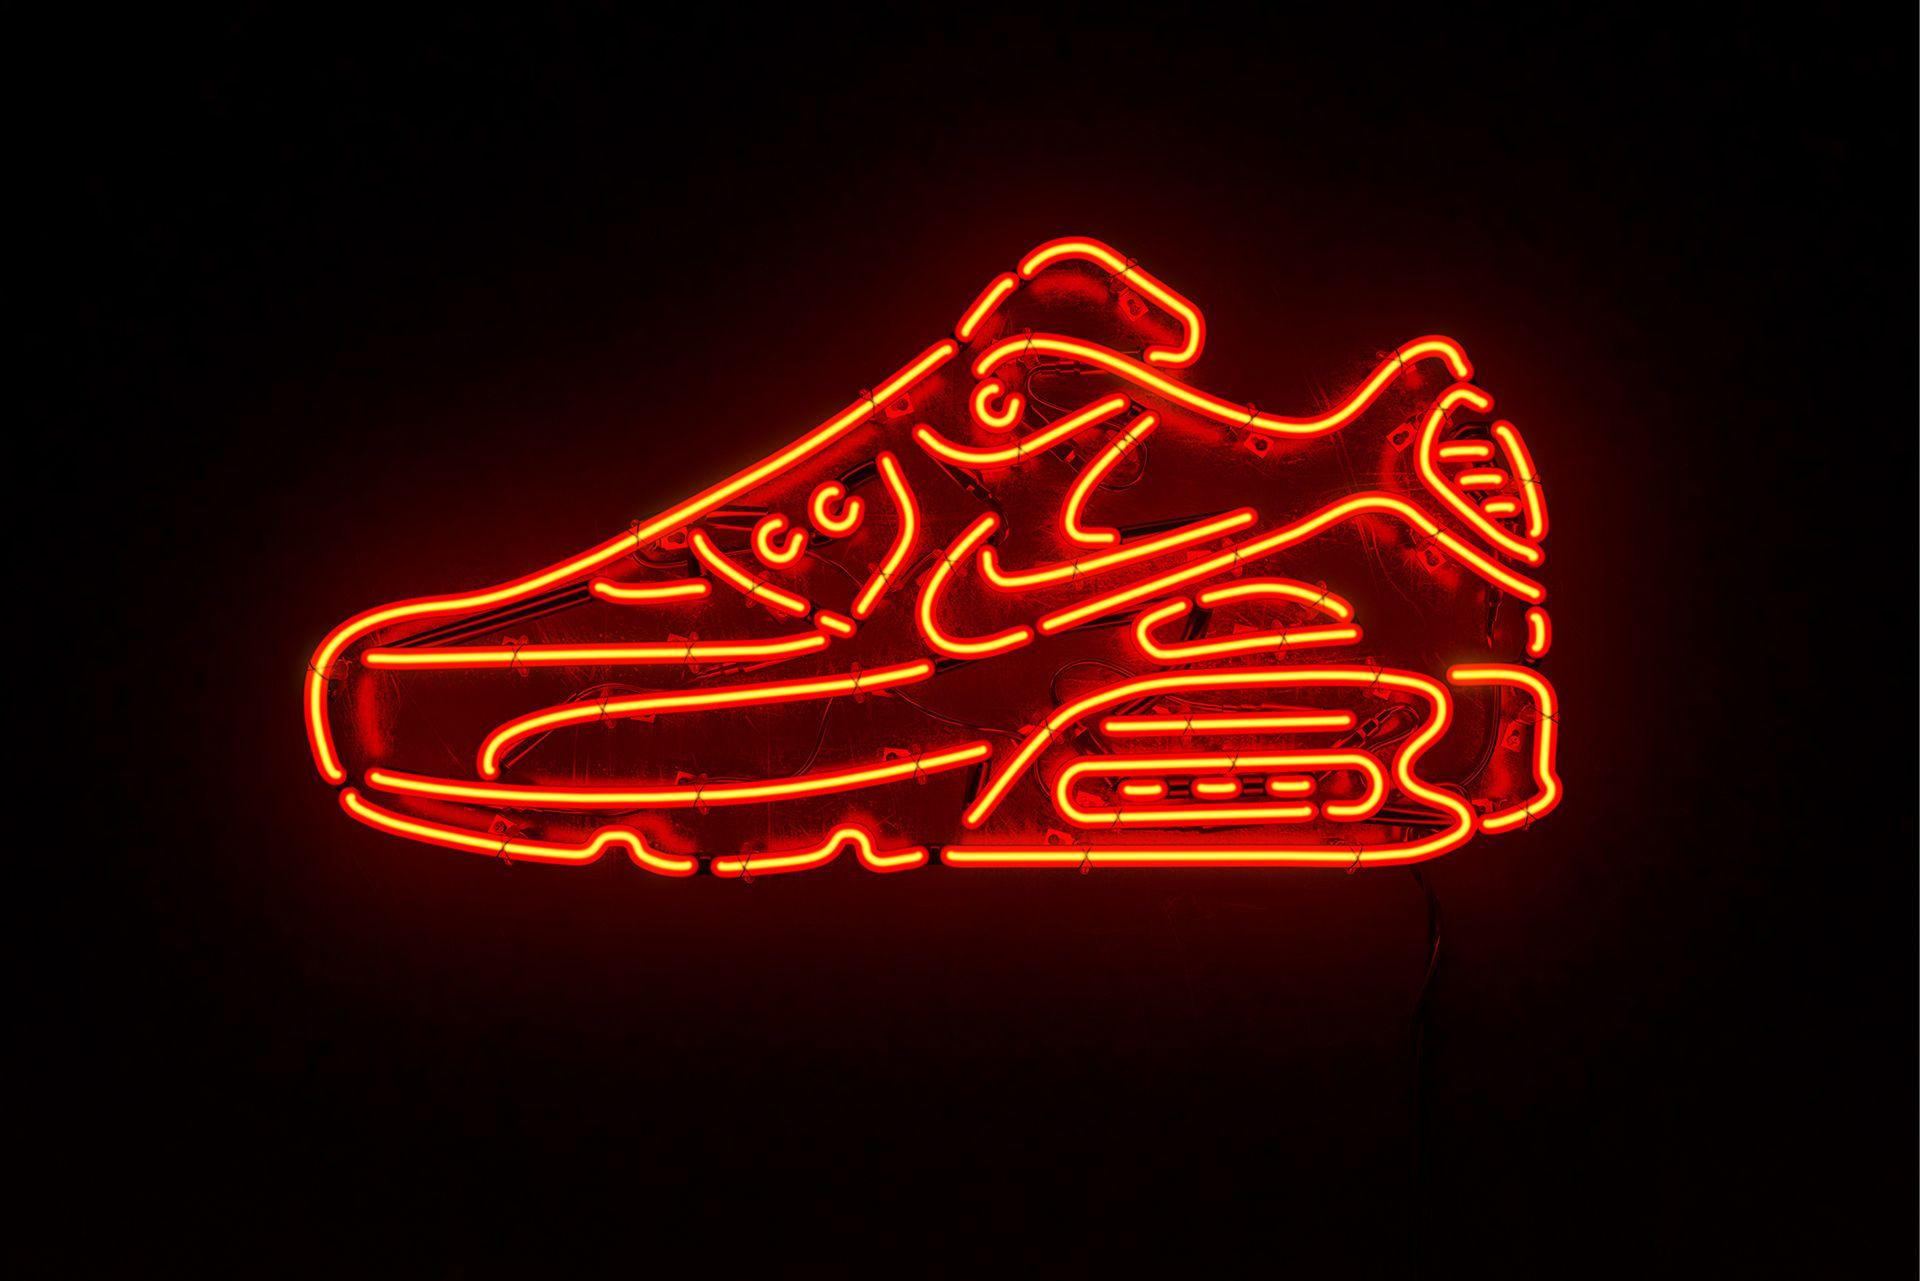 Neon Nike Logo - Nike Air Max 90 Neon 'On' by Rizon Parein | Agent Pekka